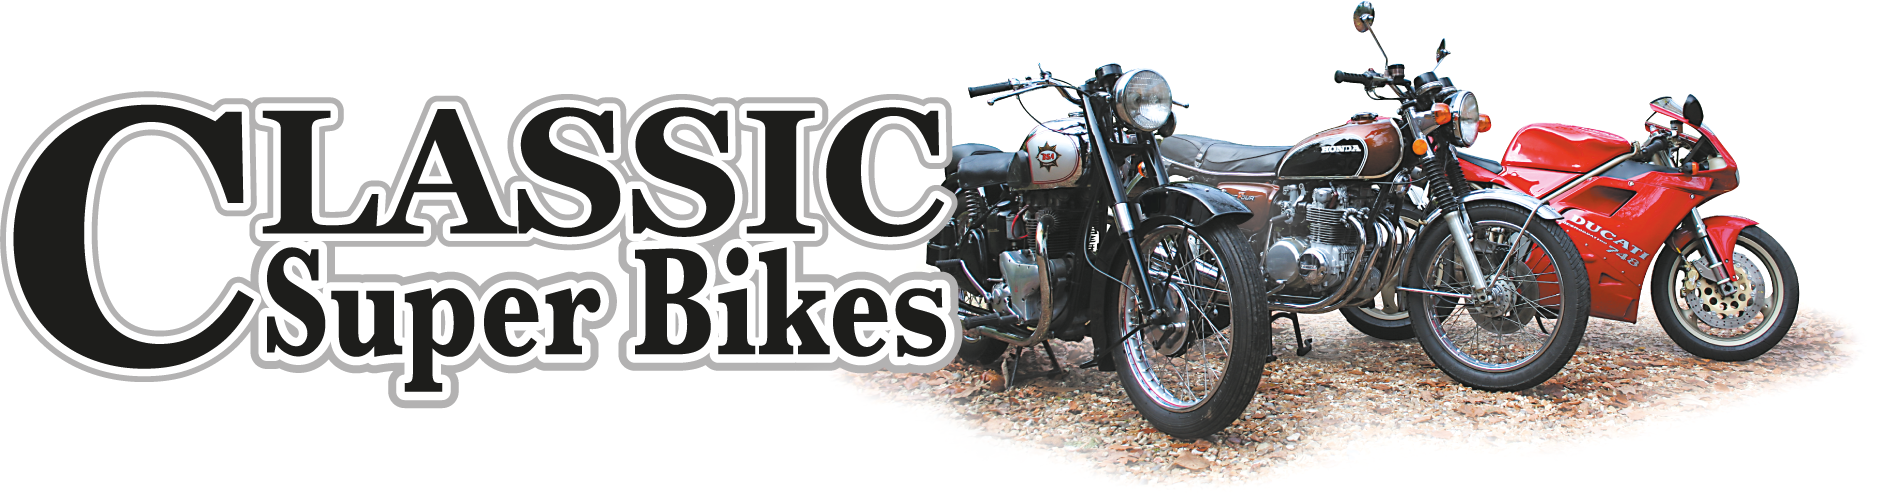 classic bikes for sale